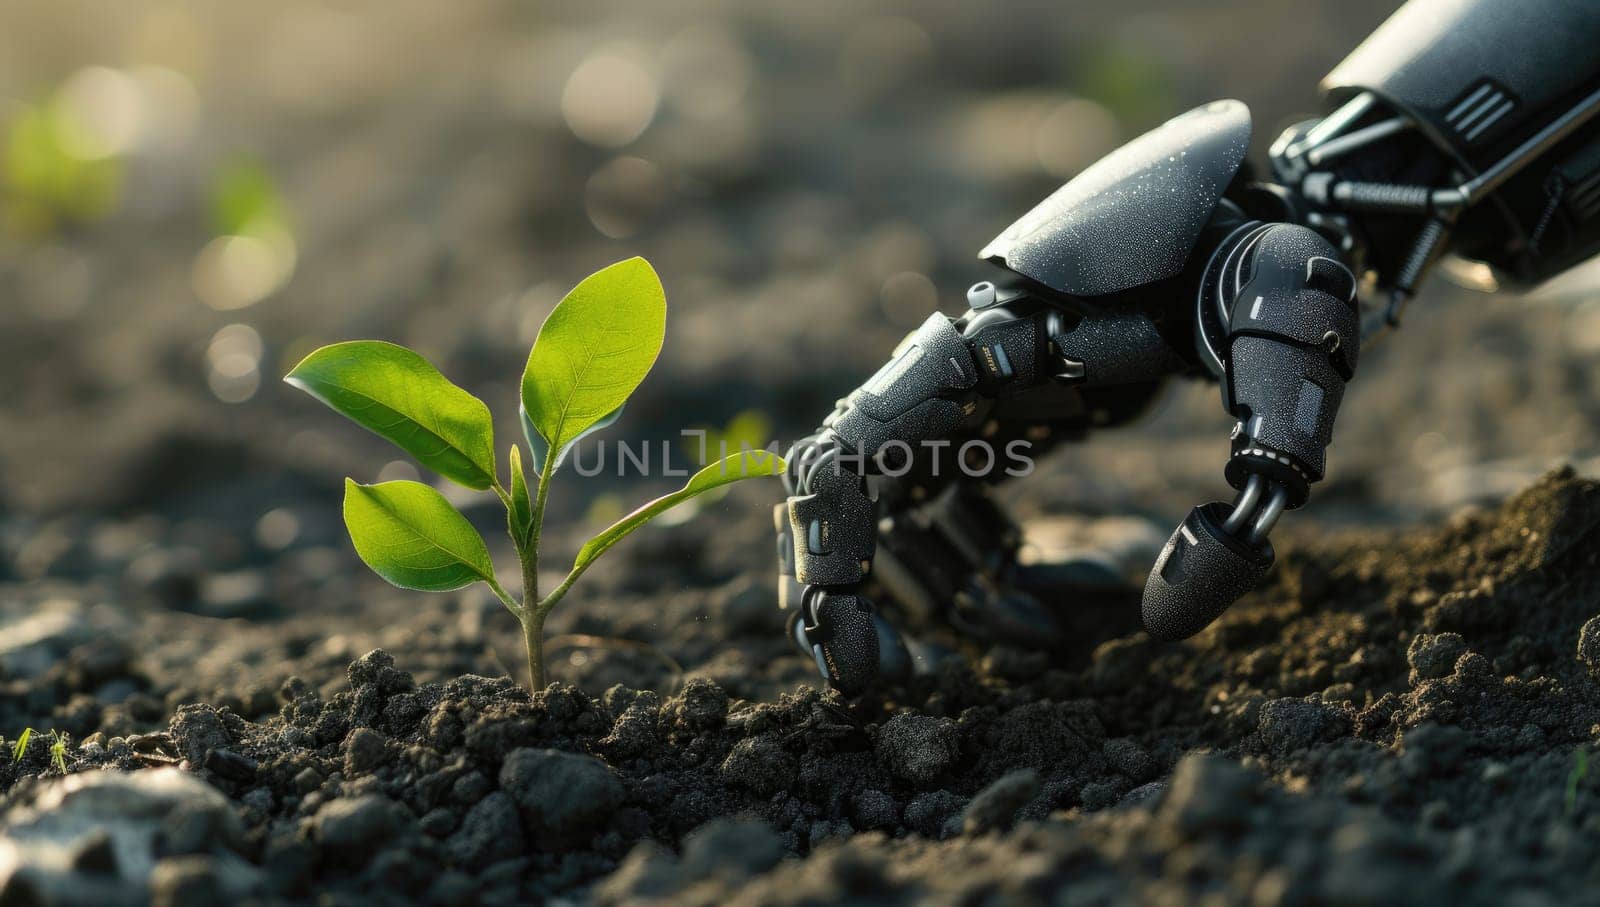 Robotic hand nurturing a young plant